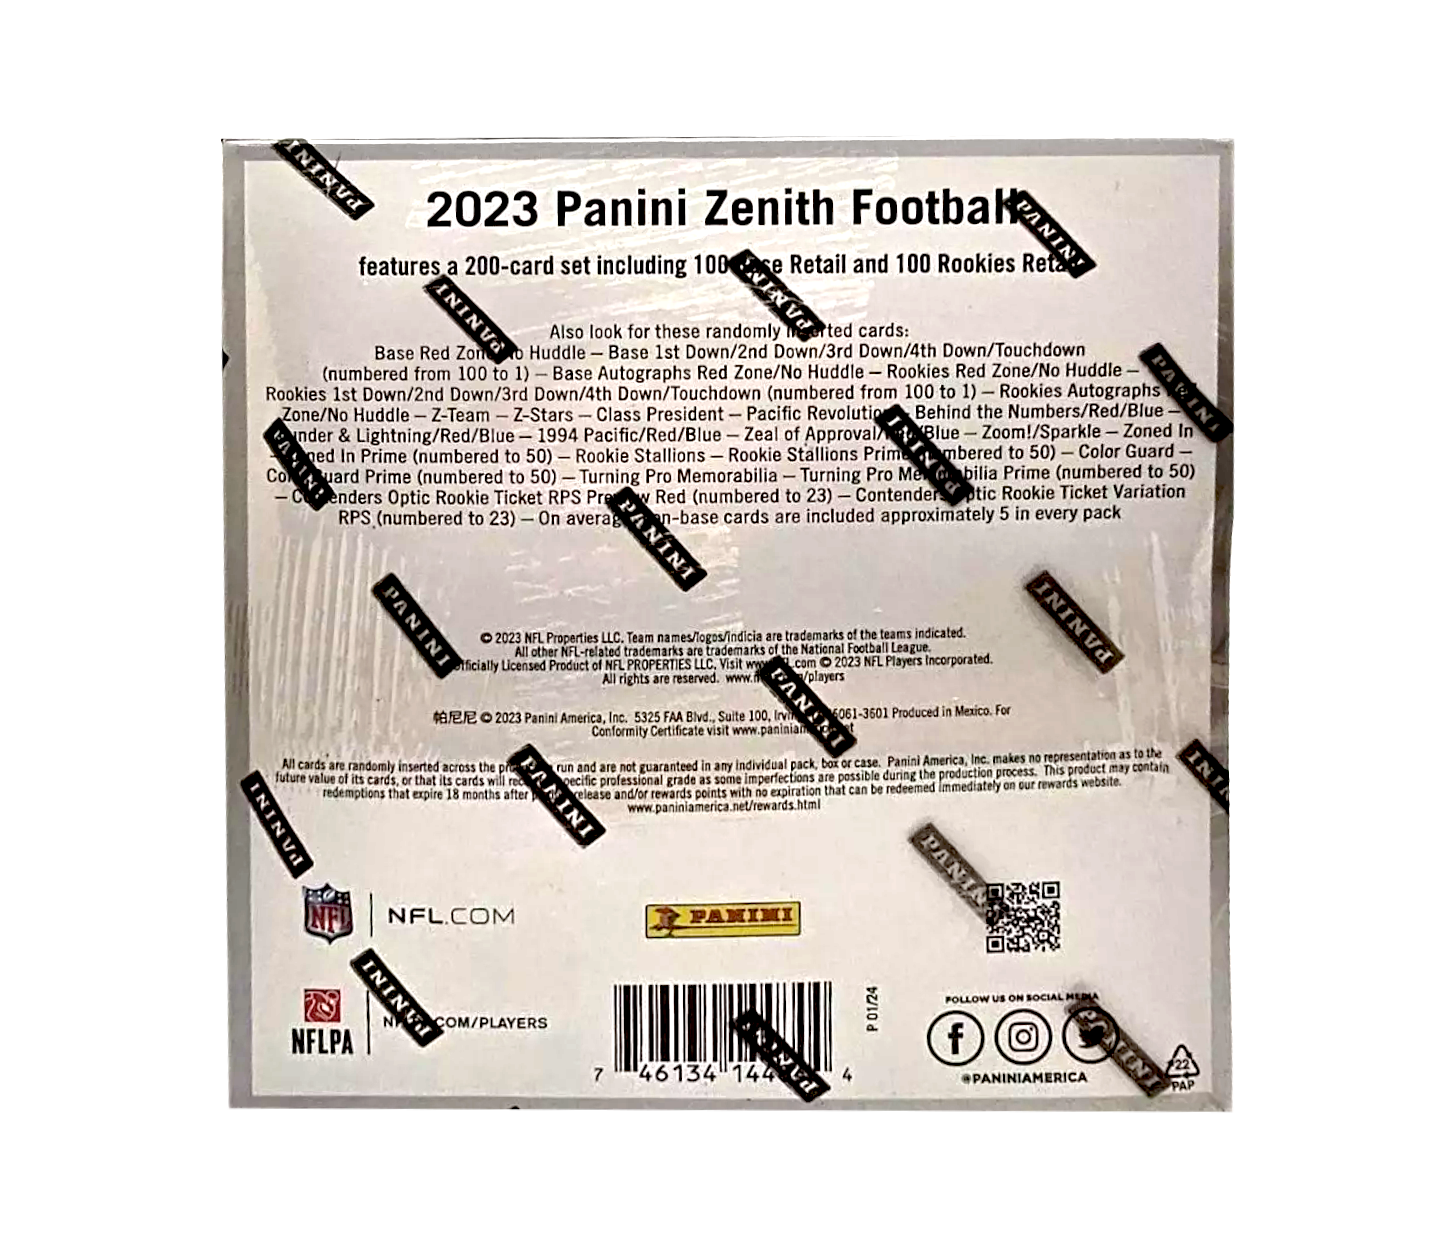 2023 Panini Zenith Football Mega Box Trading Cards - image 3 of 3